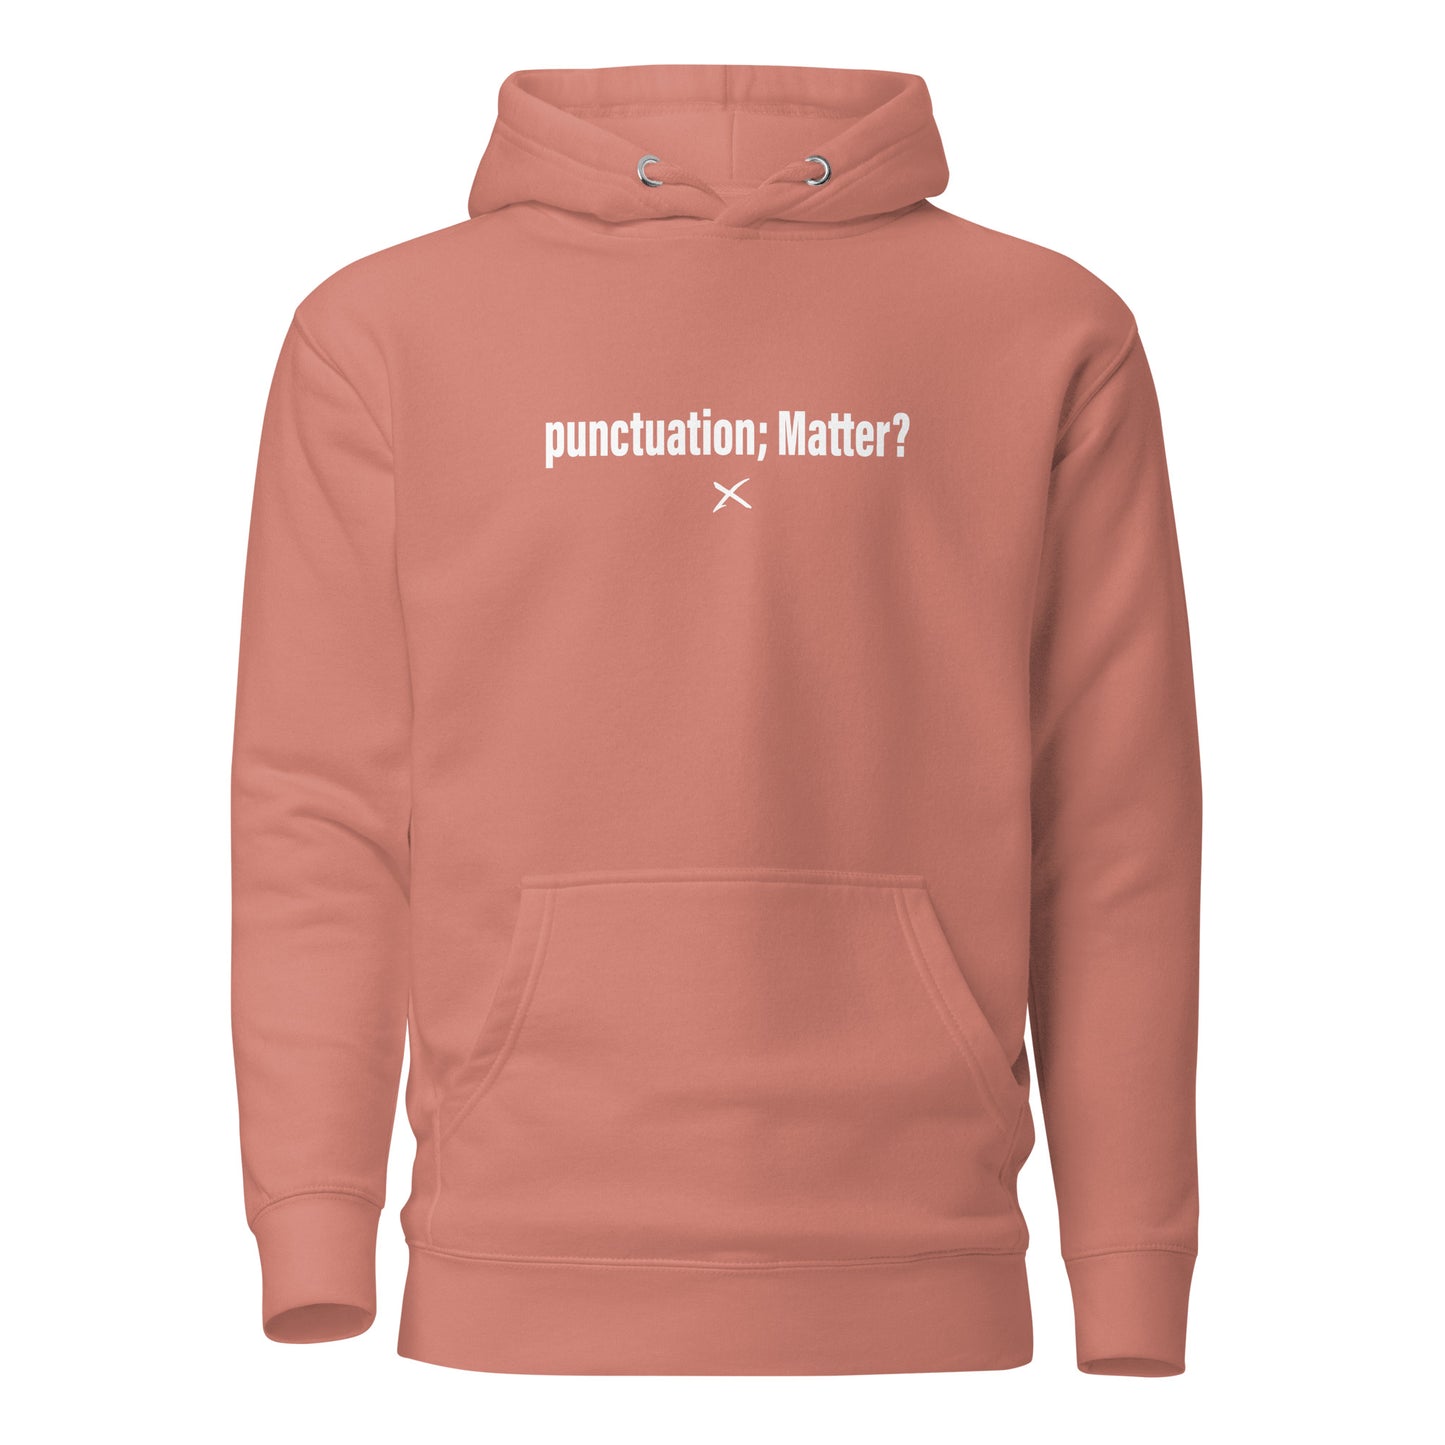 punctuation; Matter? - Hoodie